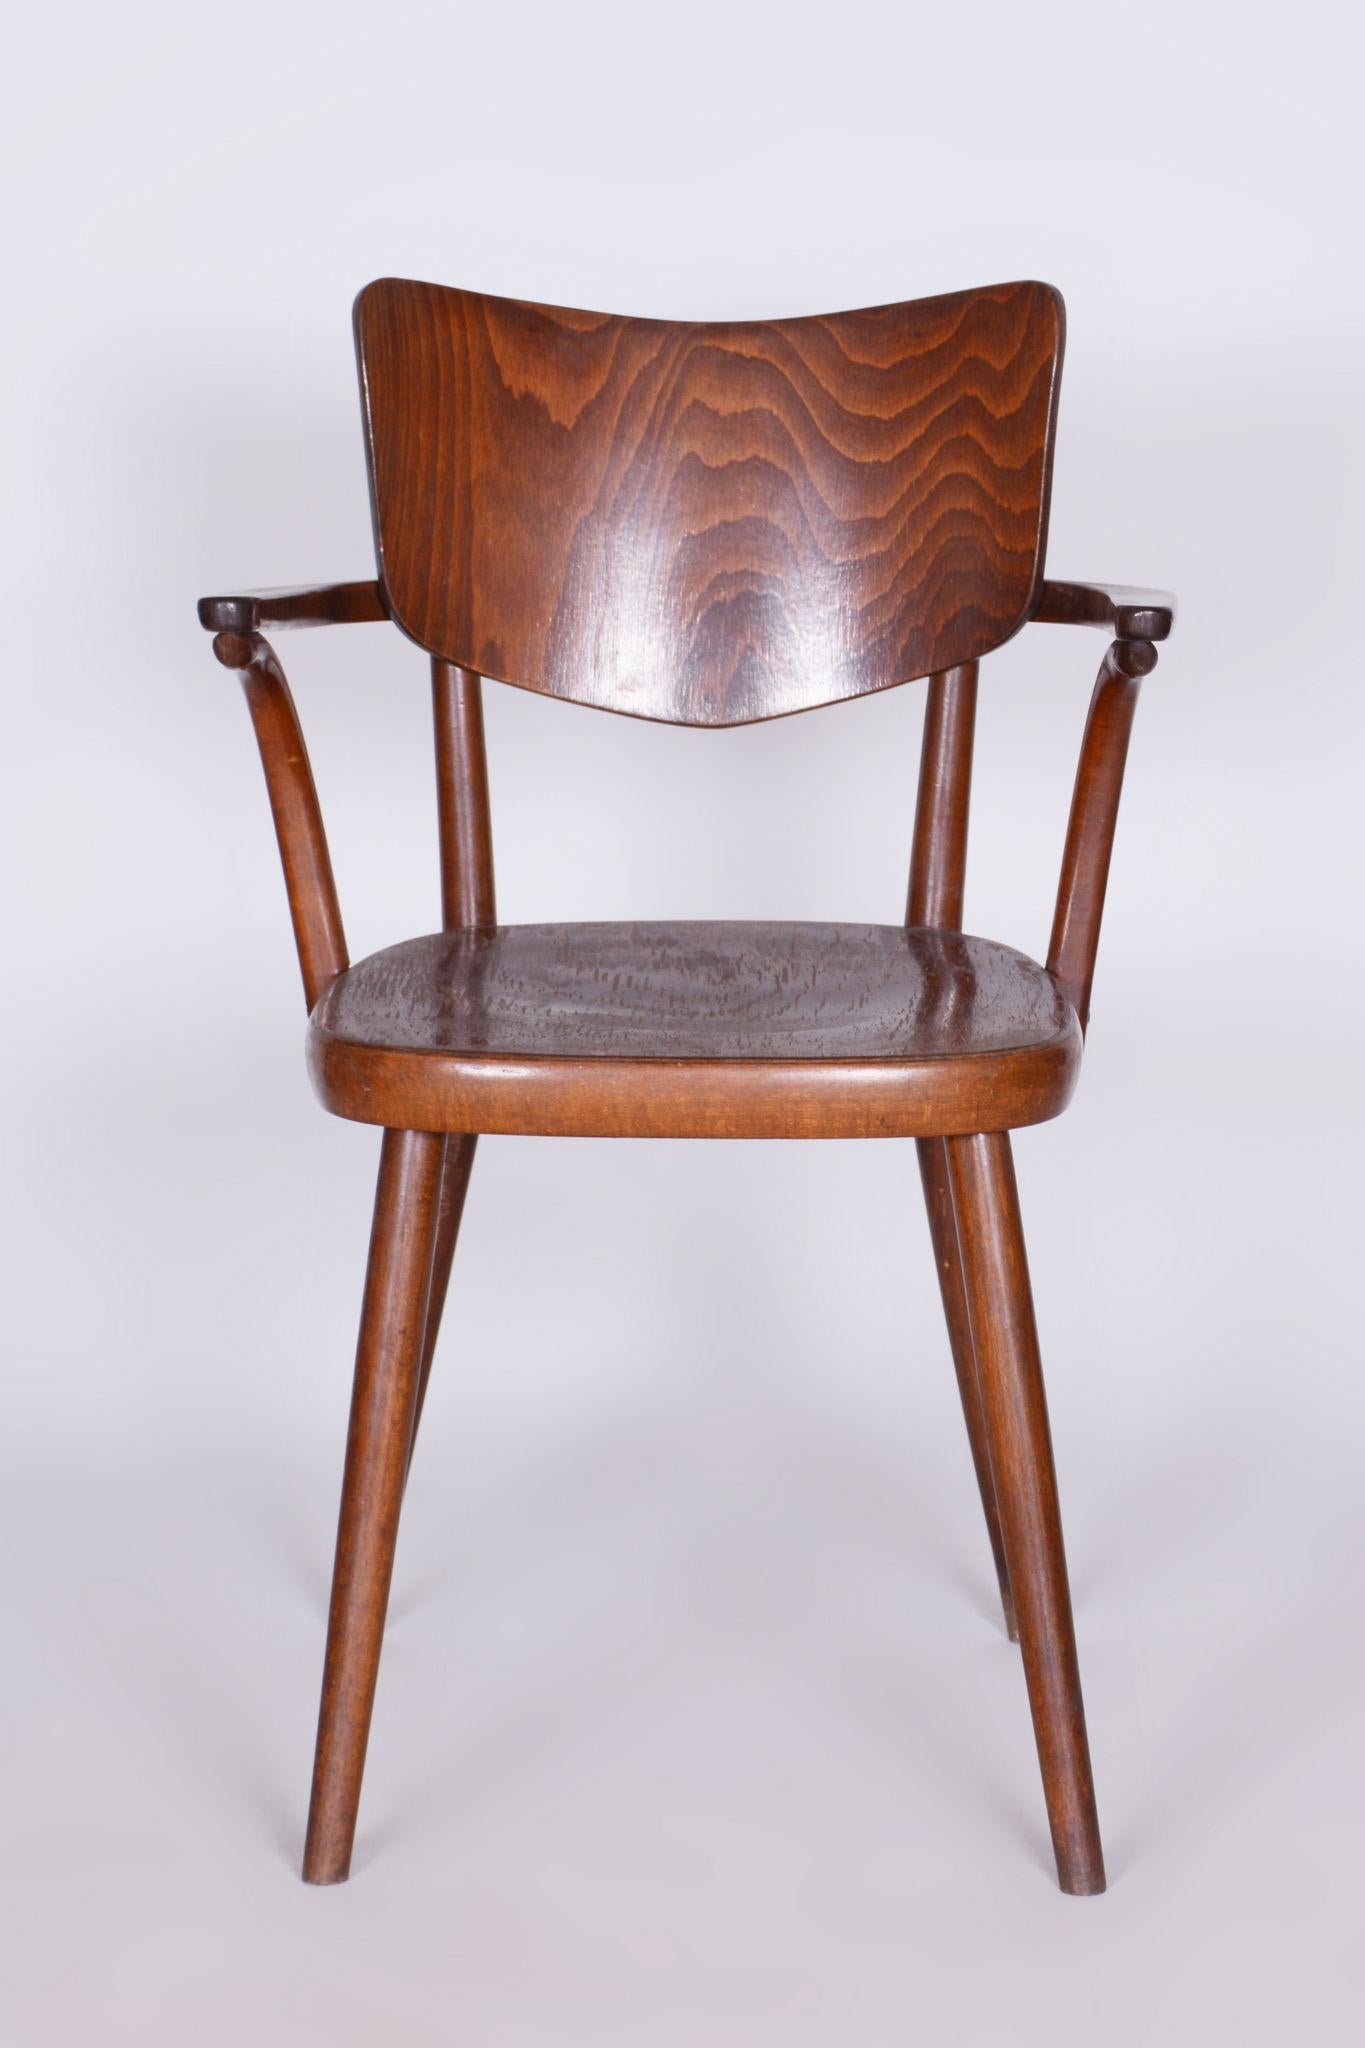 Original ArtDeco Beech Chair with Armrests by Ton, R. Hofman, Czechia, 1940s For Sale 2